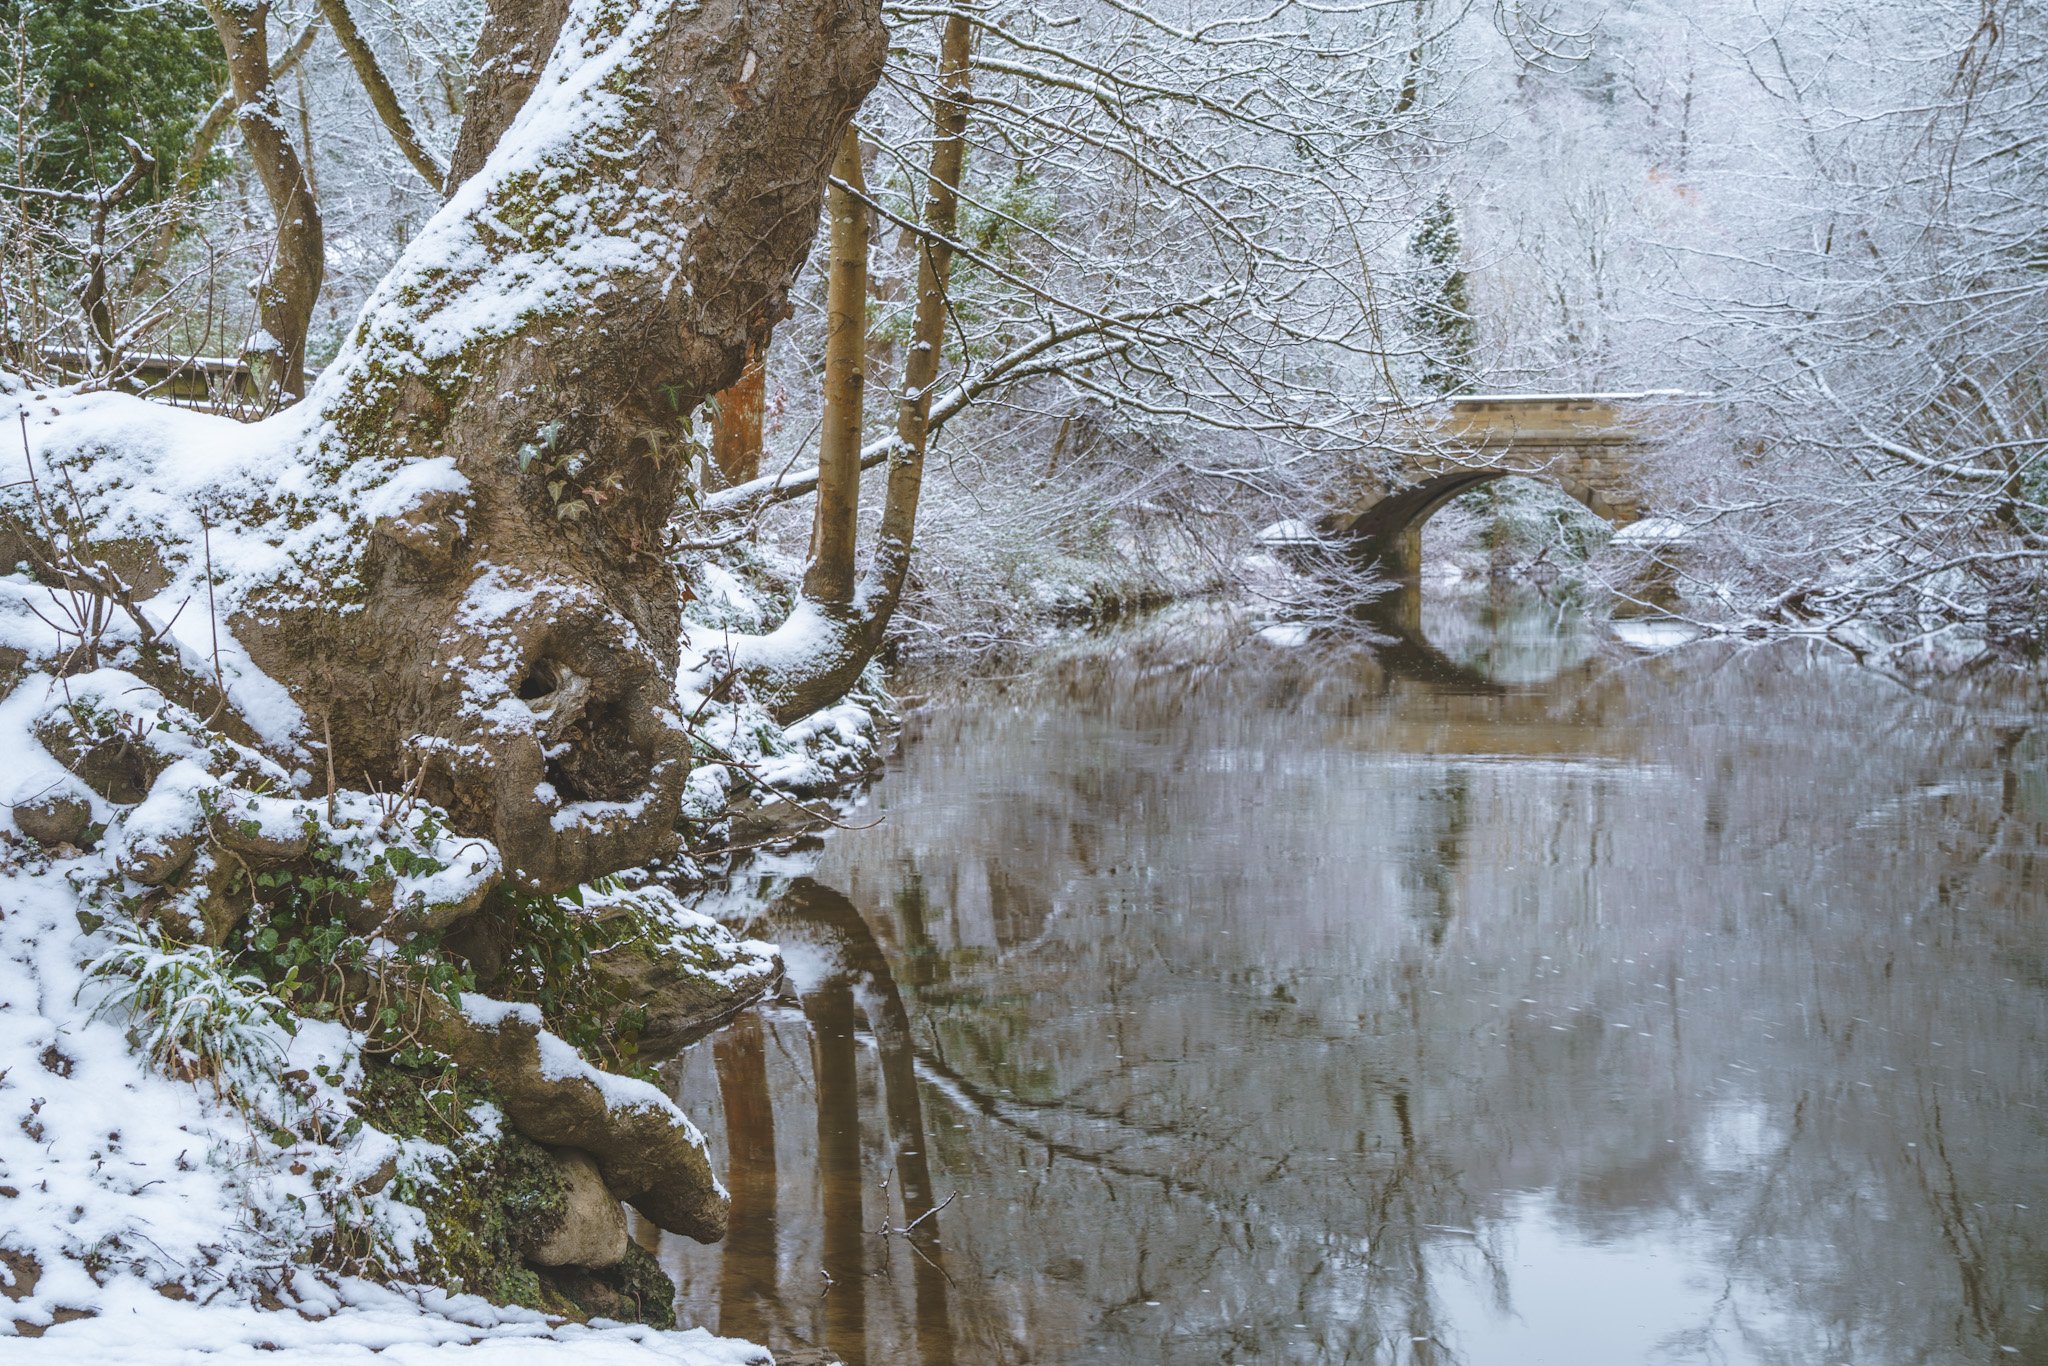 Winter Woodland, by Jim Scott